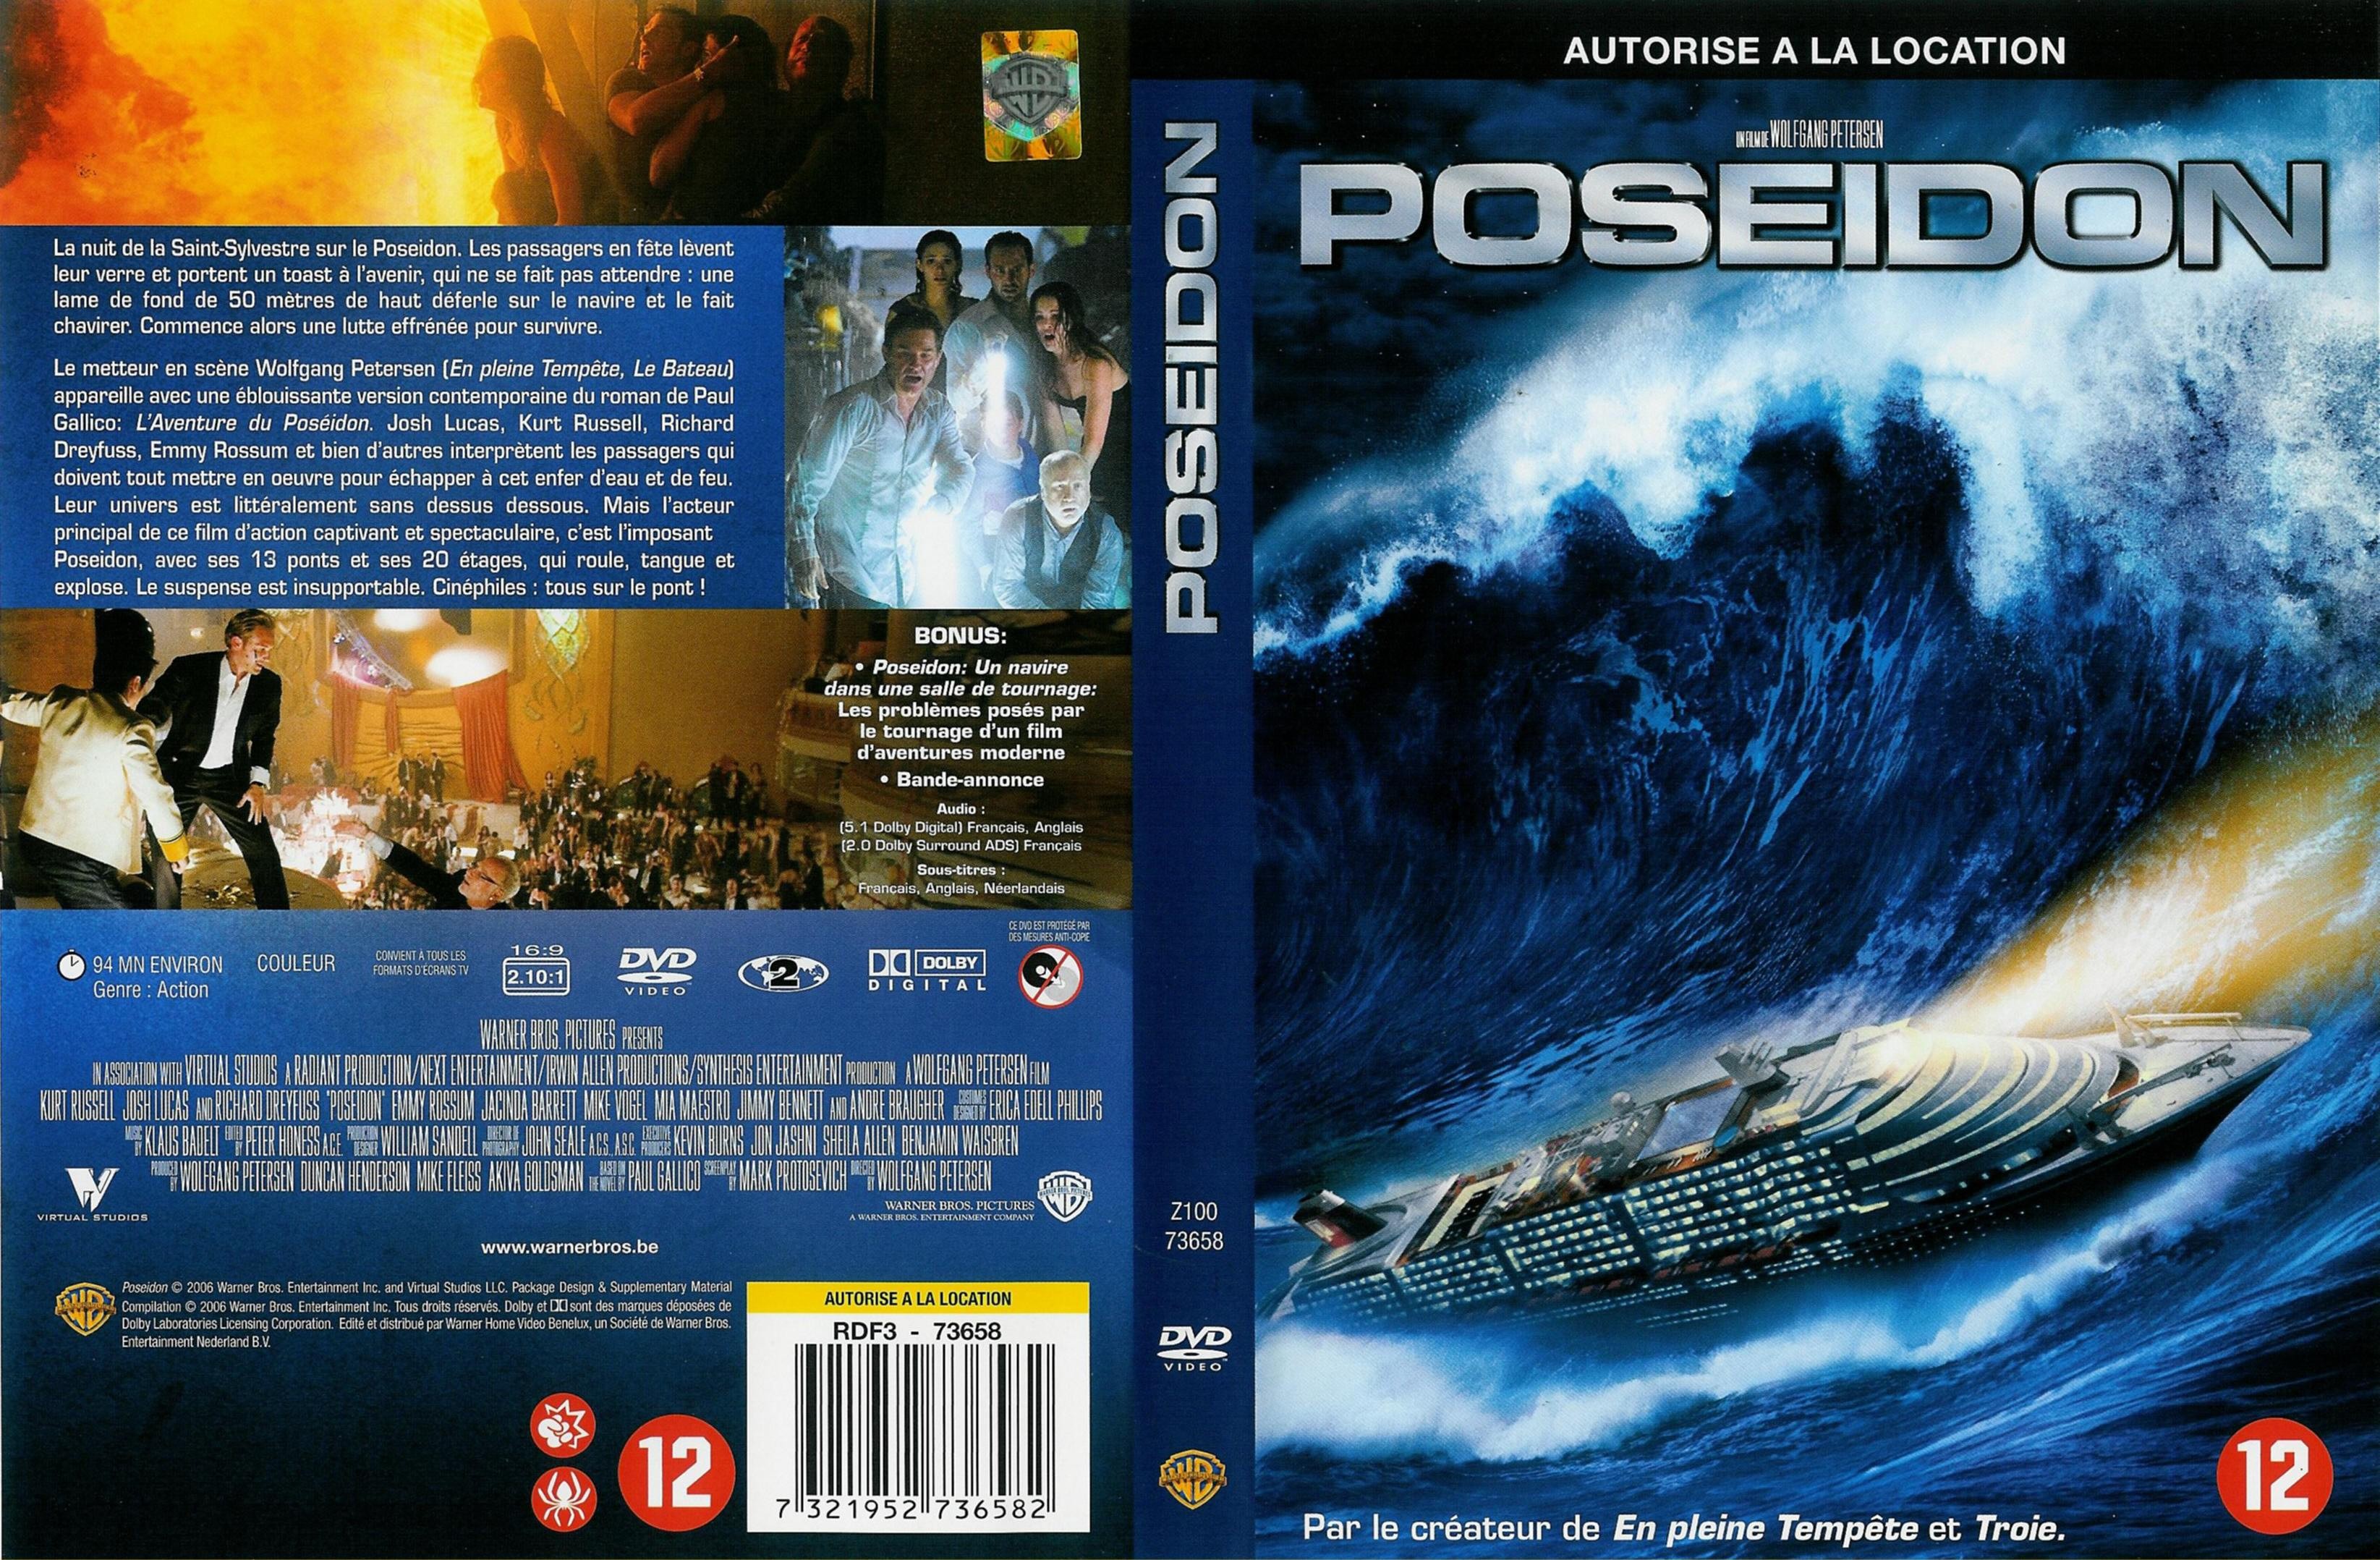 Jaquette DVD Poseidon v2